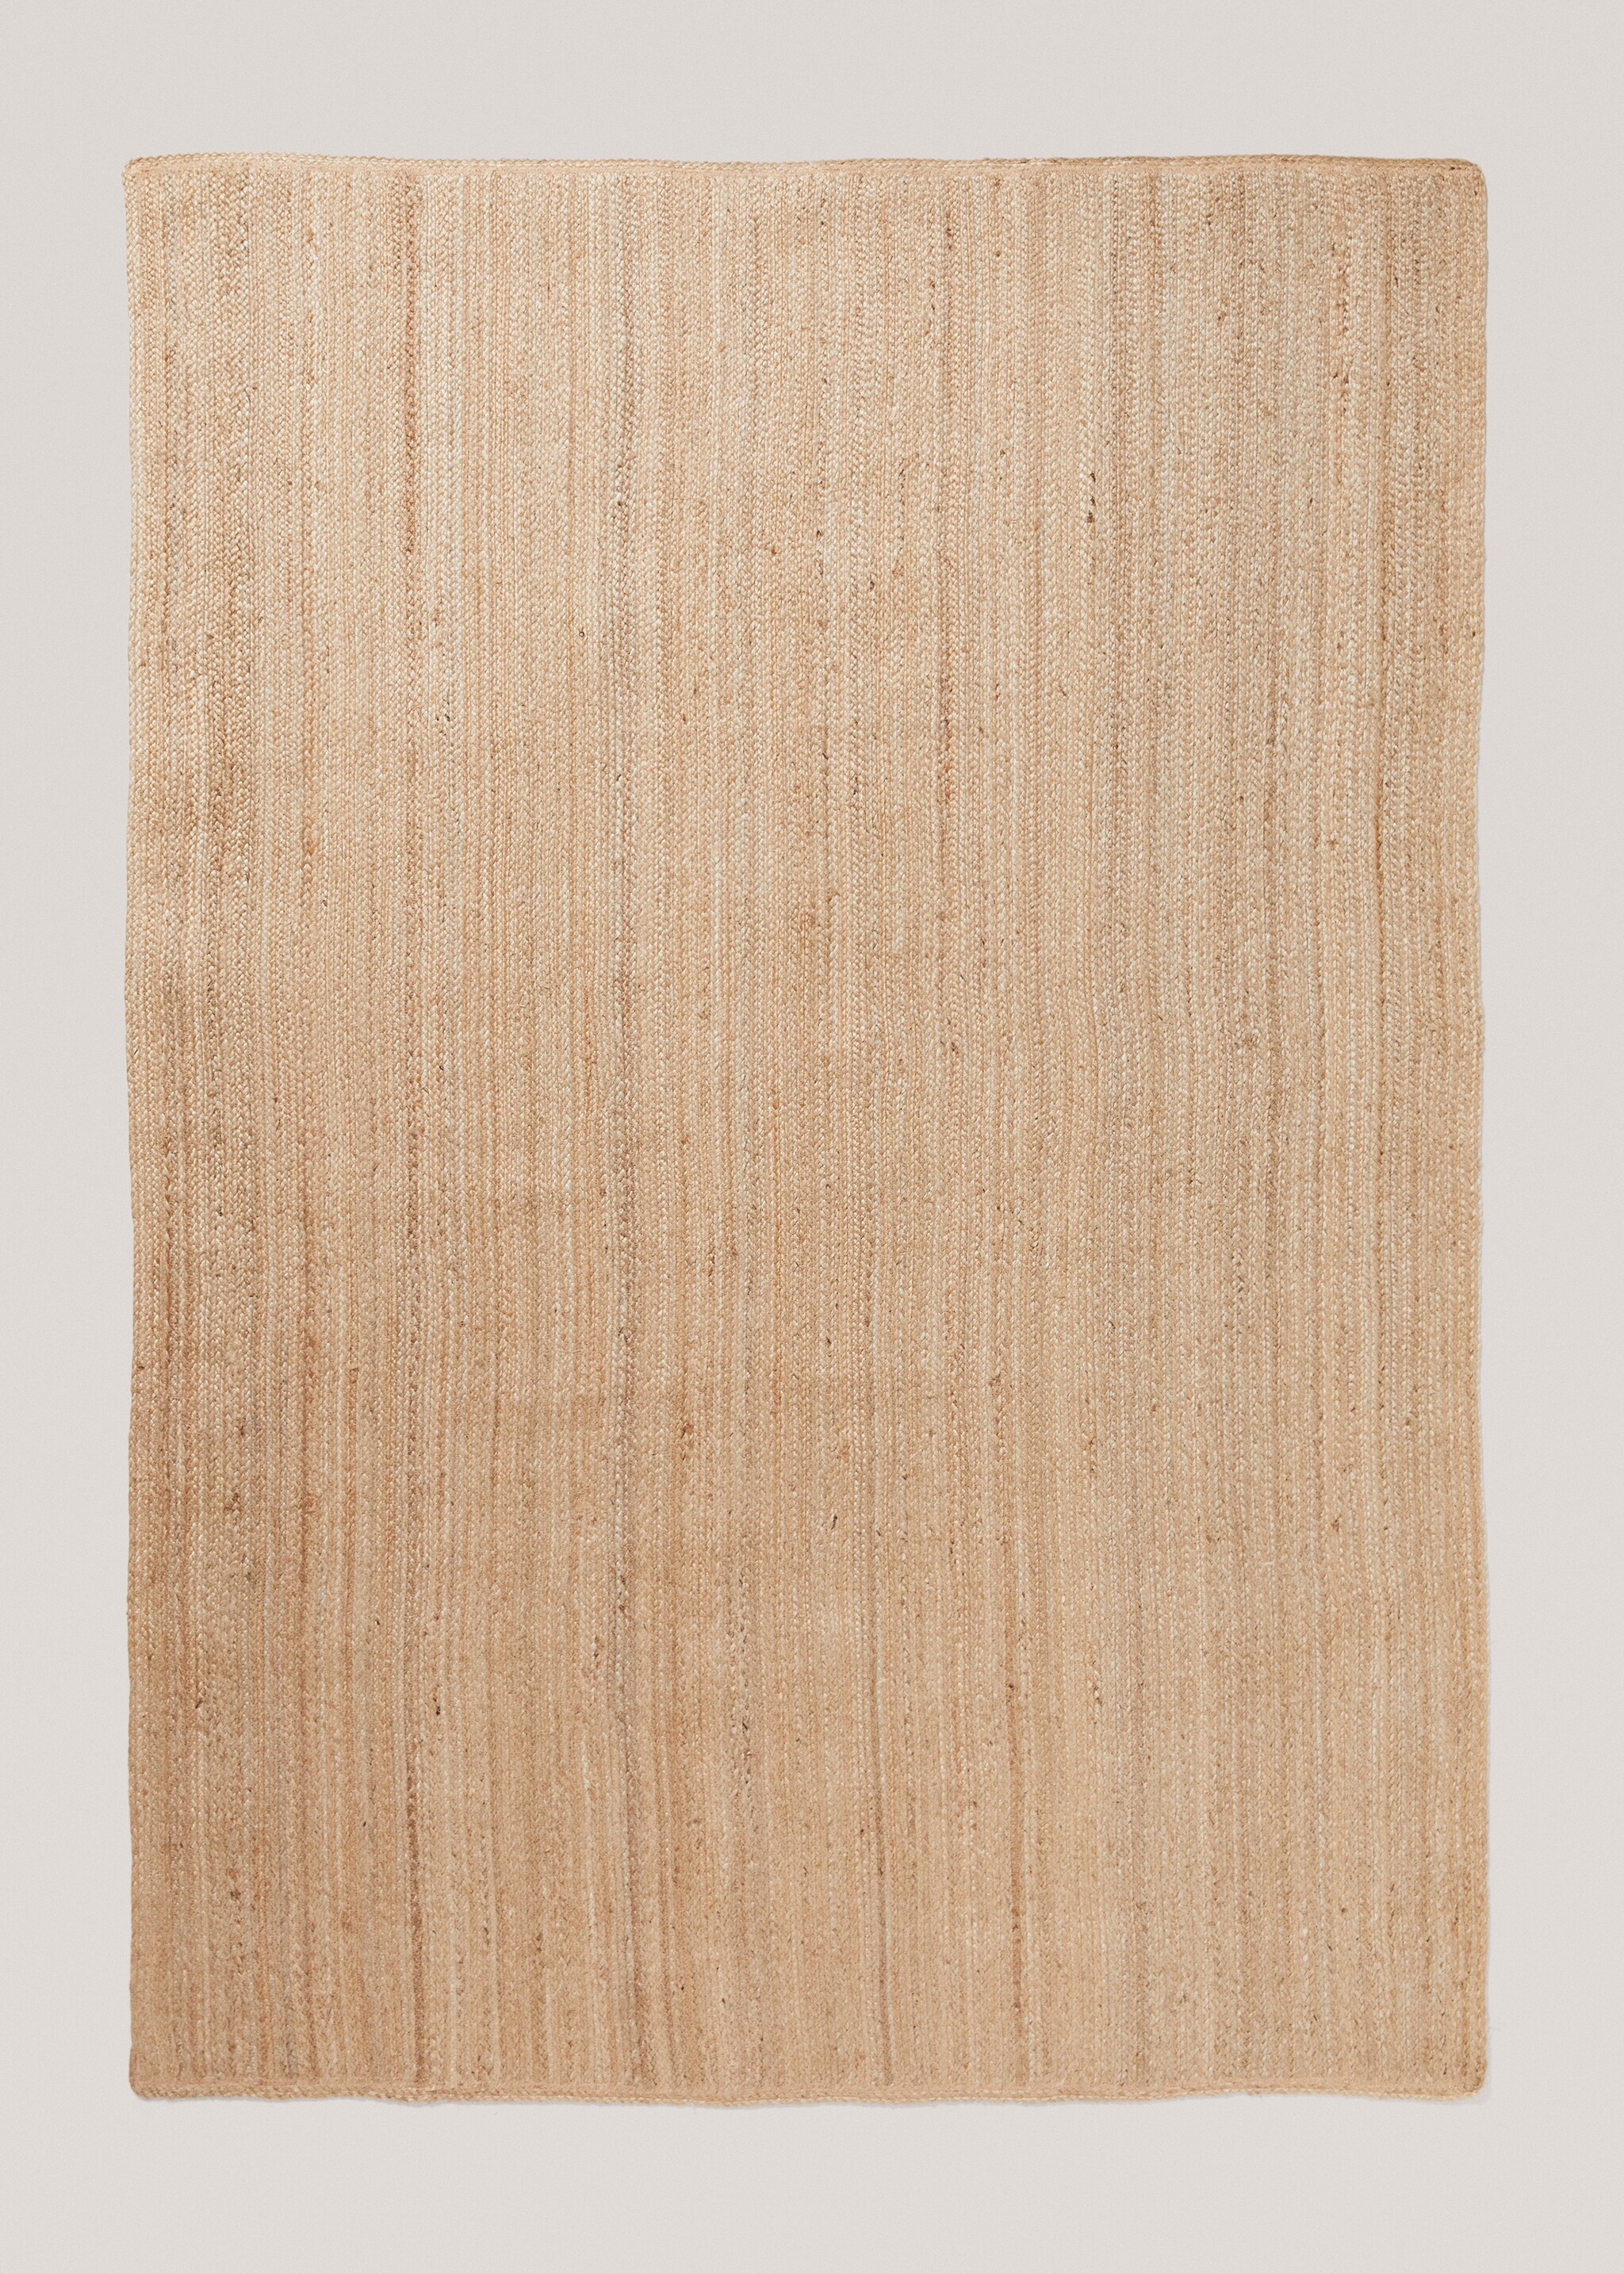 Dywan z naturalnych włókien 170 x 240 cm - Artigo sem modelo